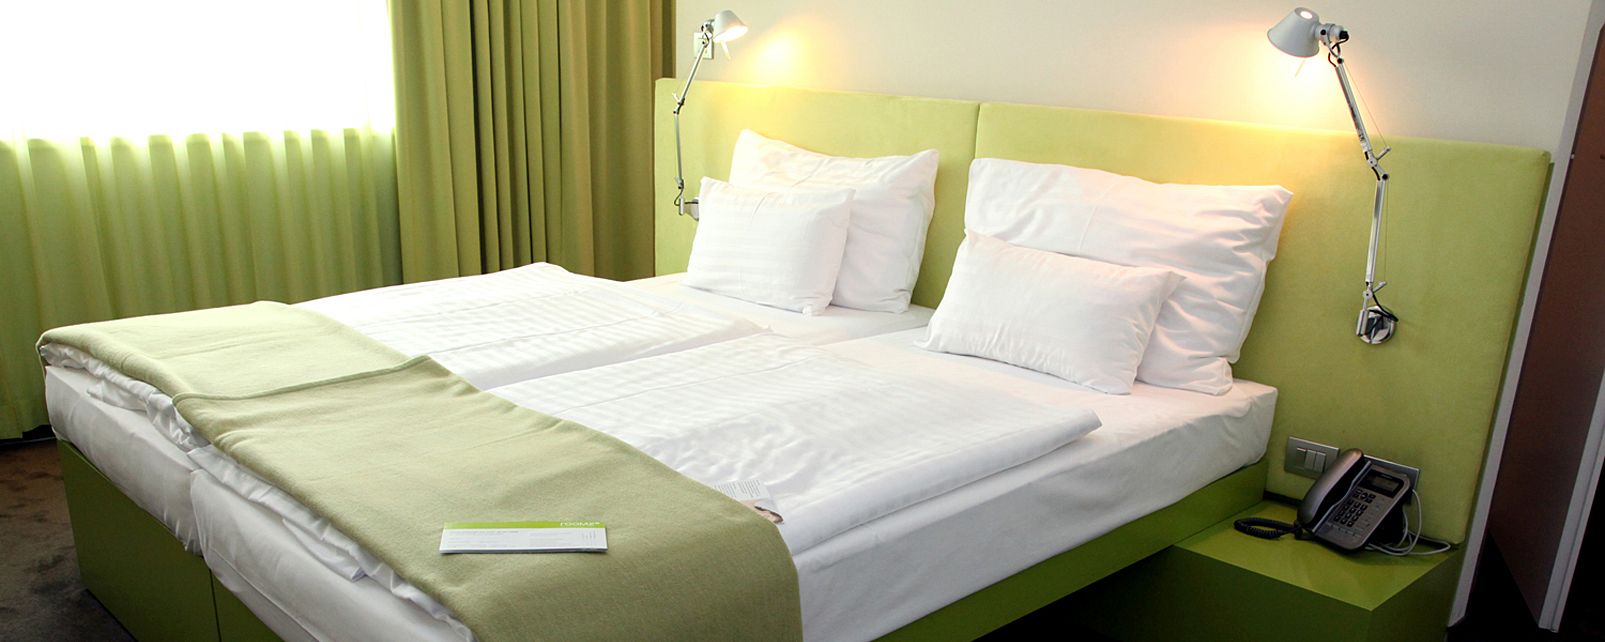 Hotel Roomz Vienna